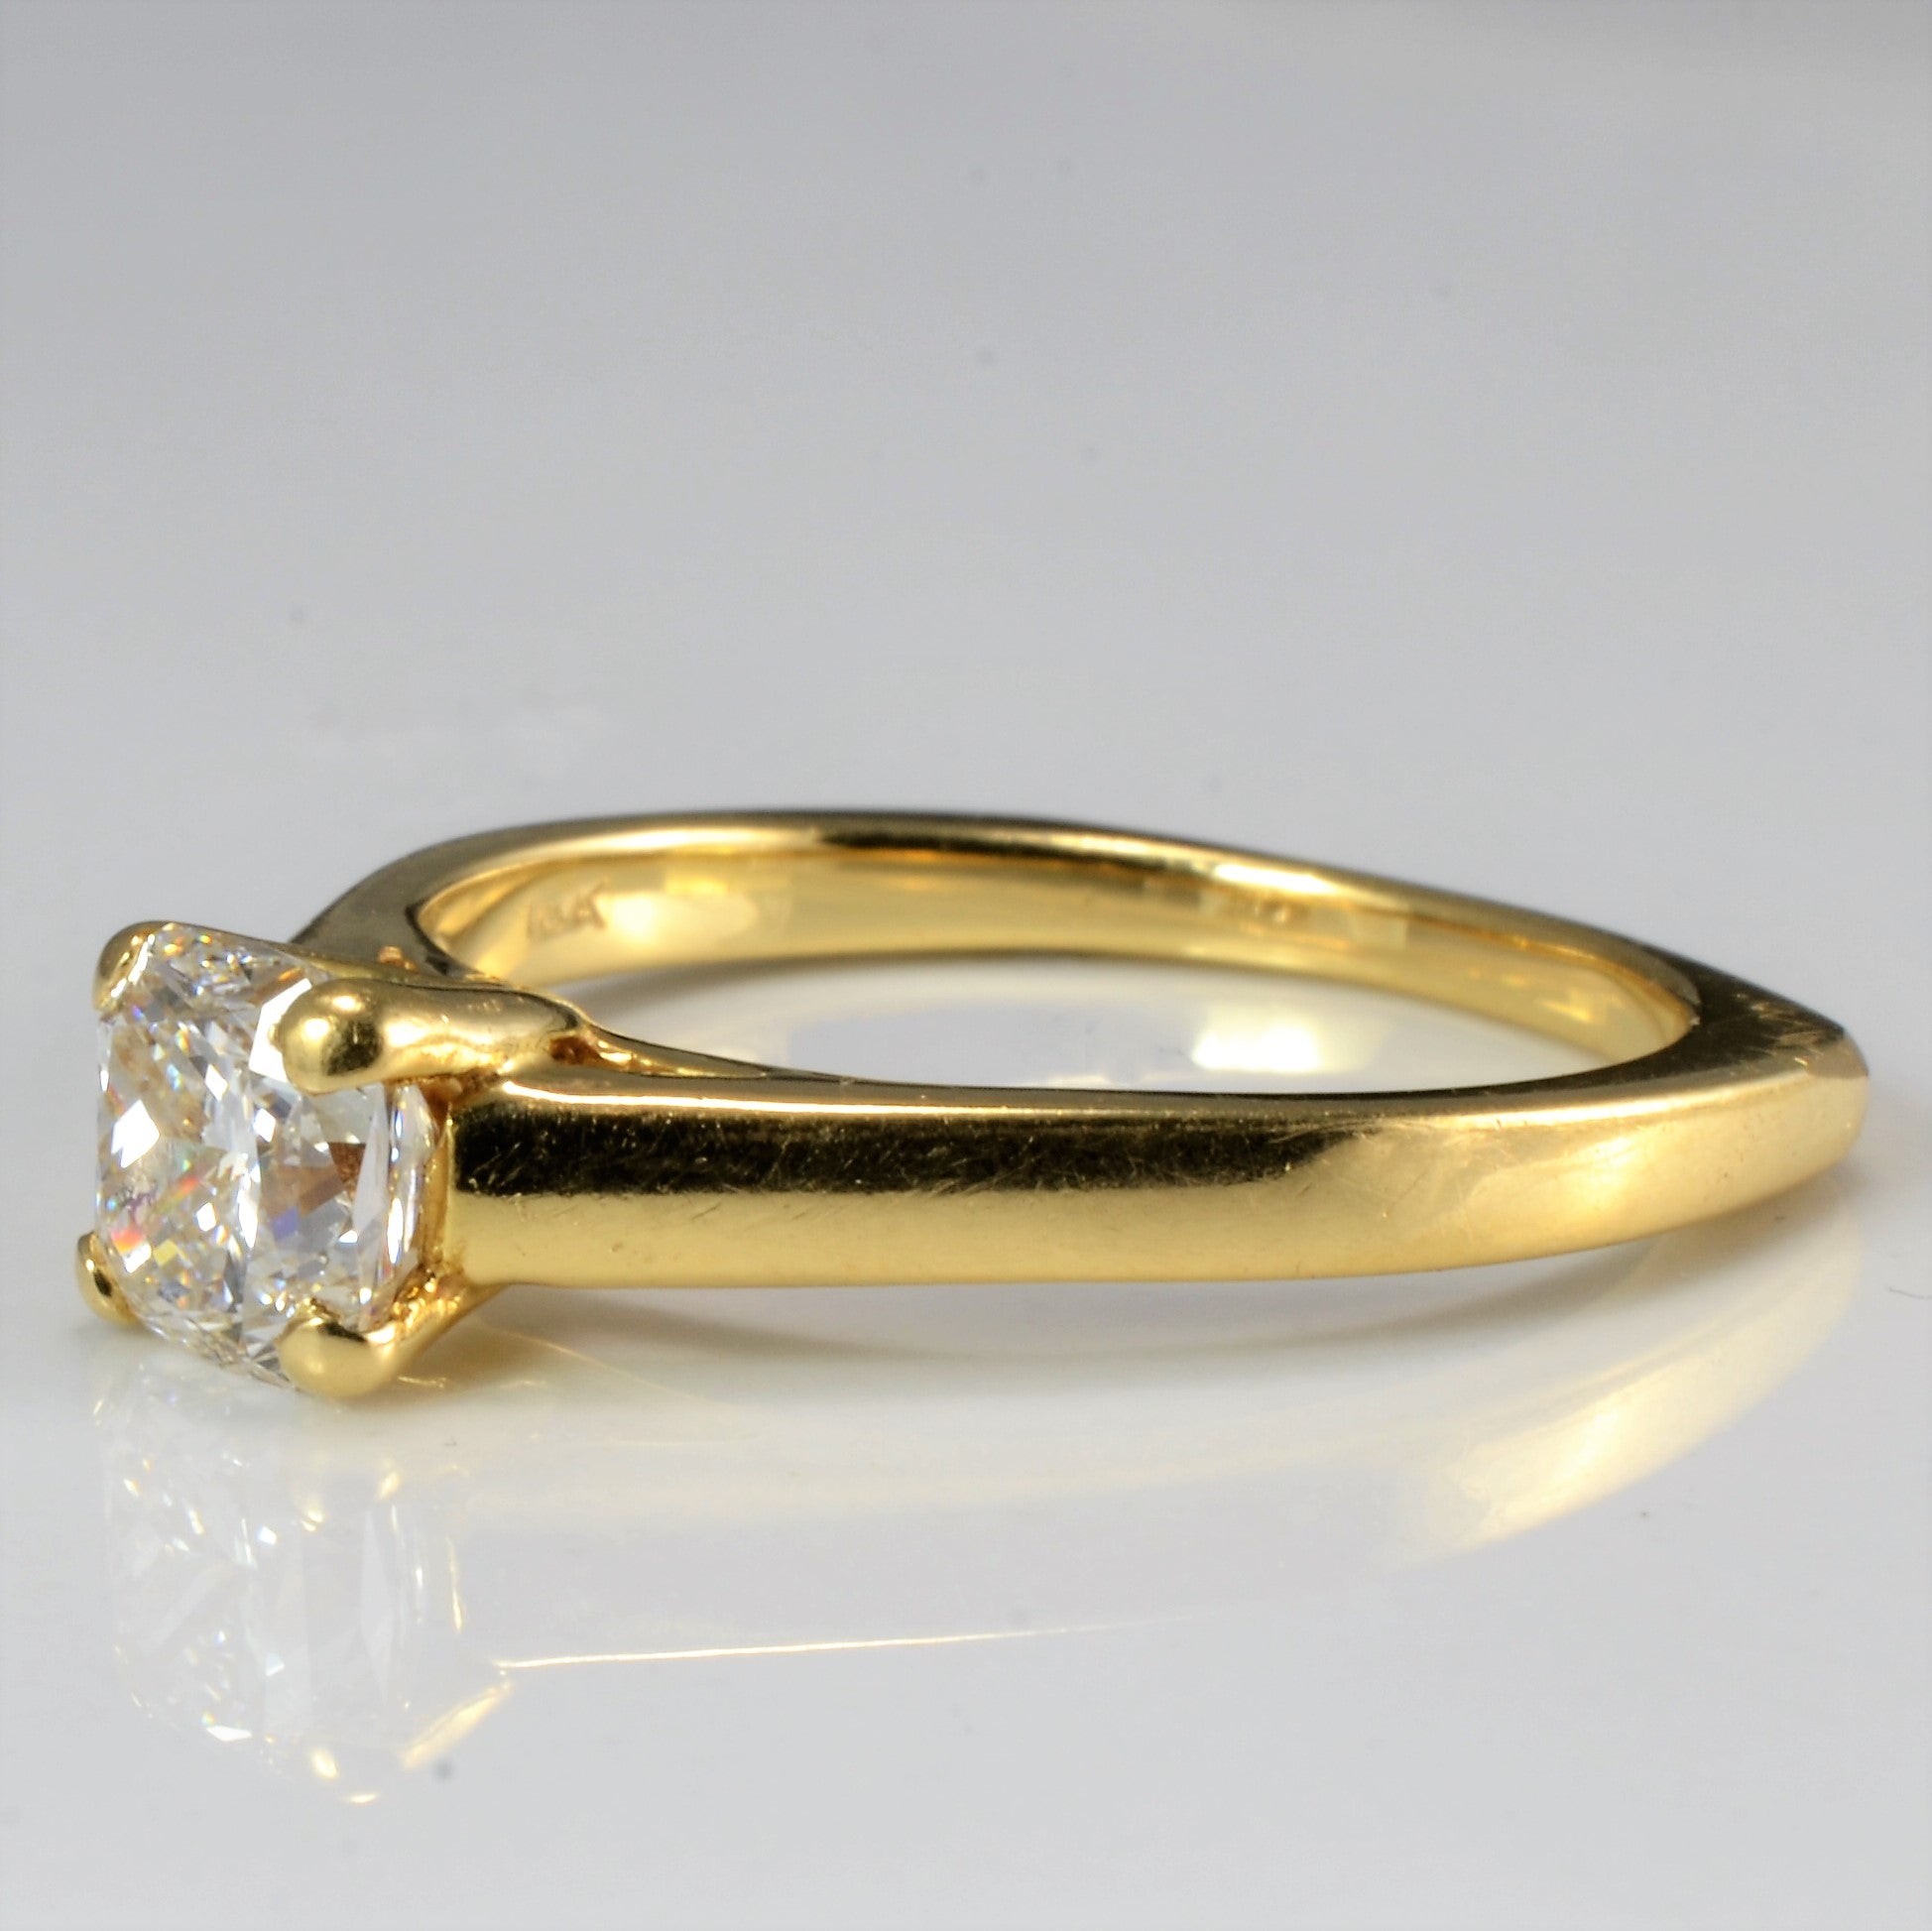 Solitaire Diamond Engagement Ring | 1.01 ct, SZ 6.75 |